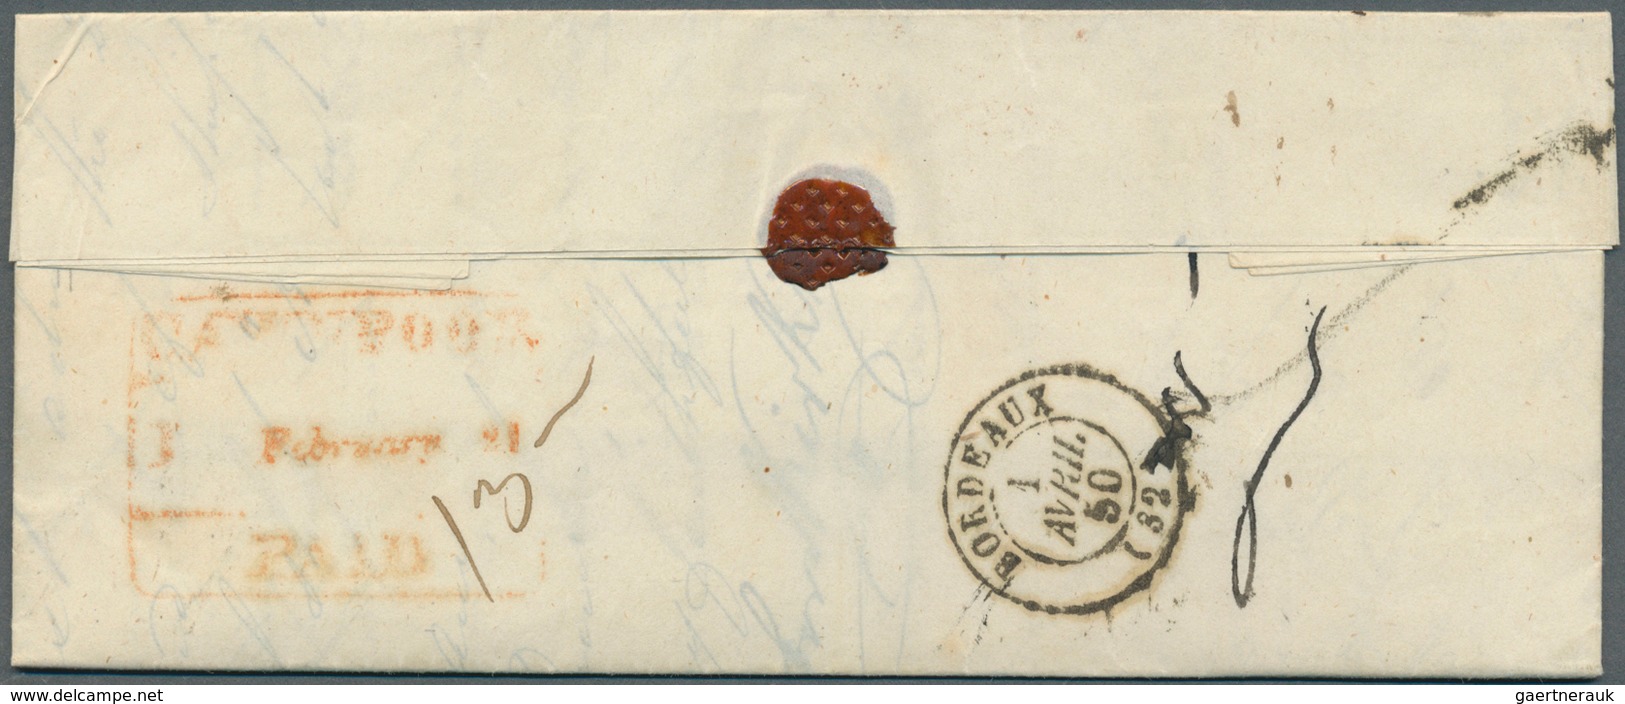 08638 Indien - Vorphilatelie: 1827-1850: Four letters to Bordeaux, FRANCE, with 1) 1827 letter from Calcut